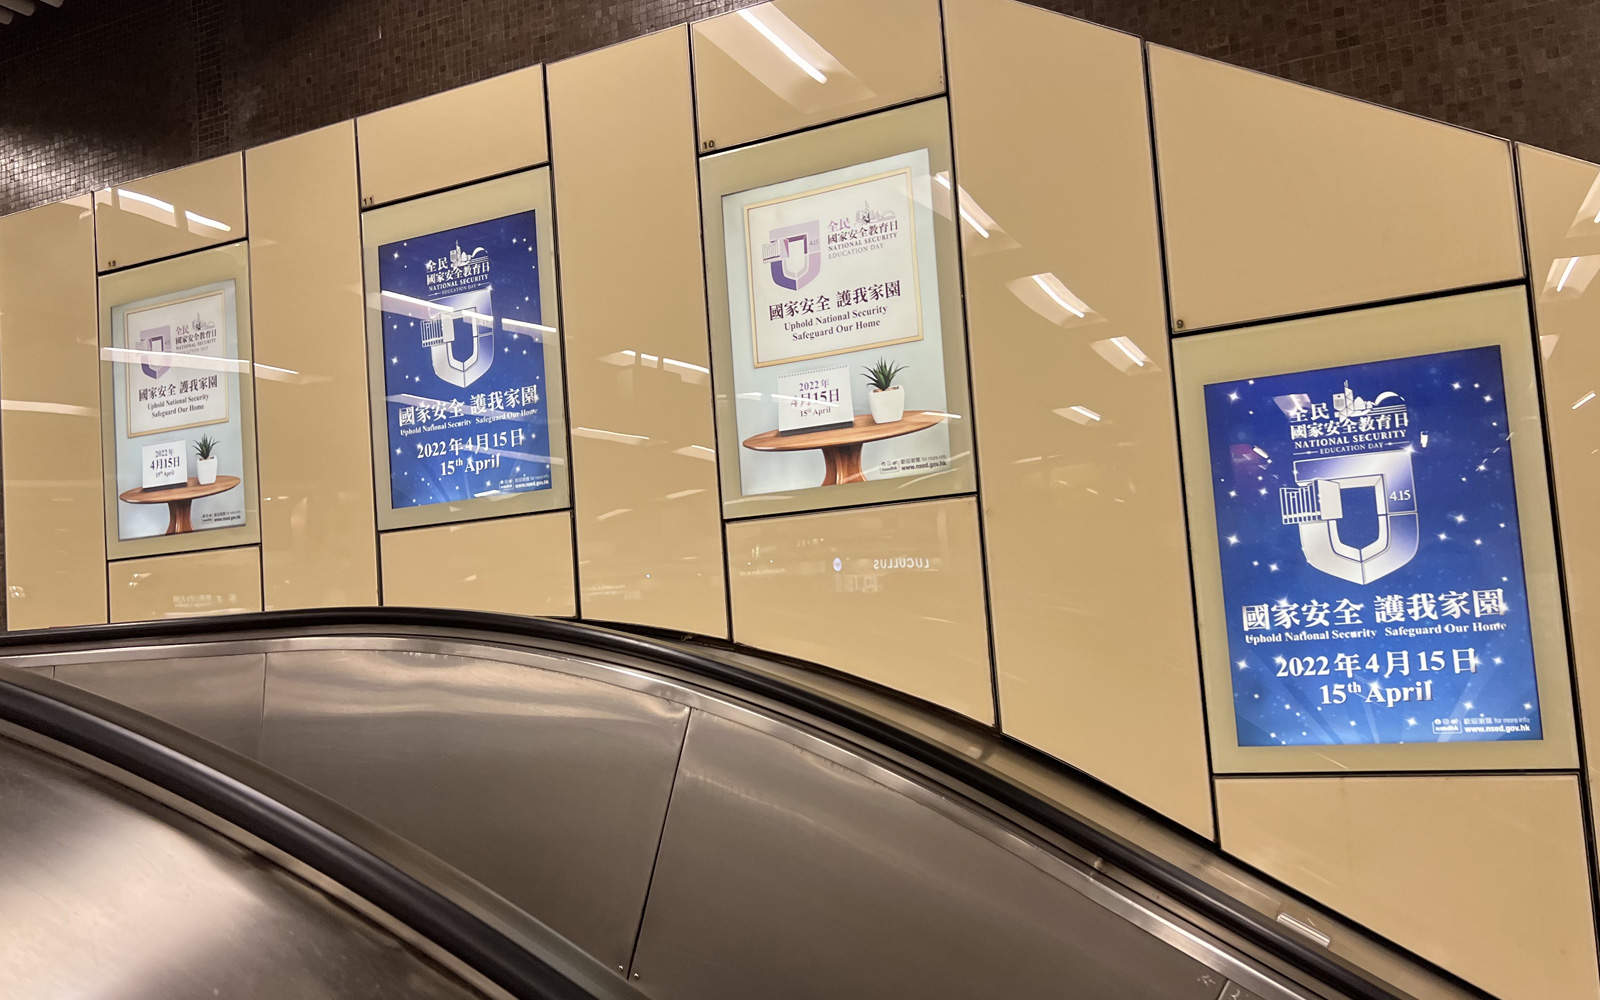 Escalators in MTR Stations